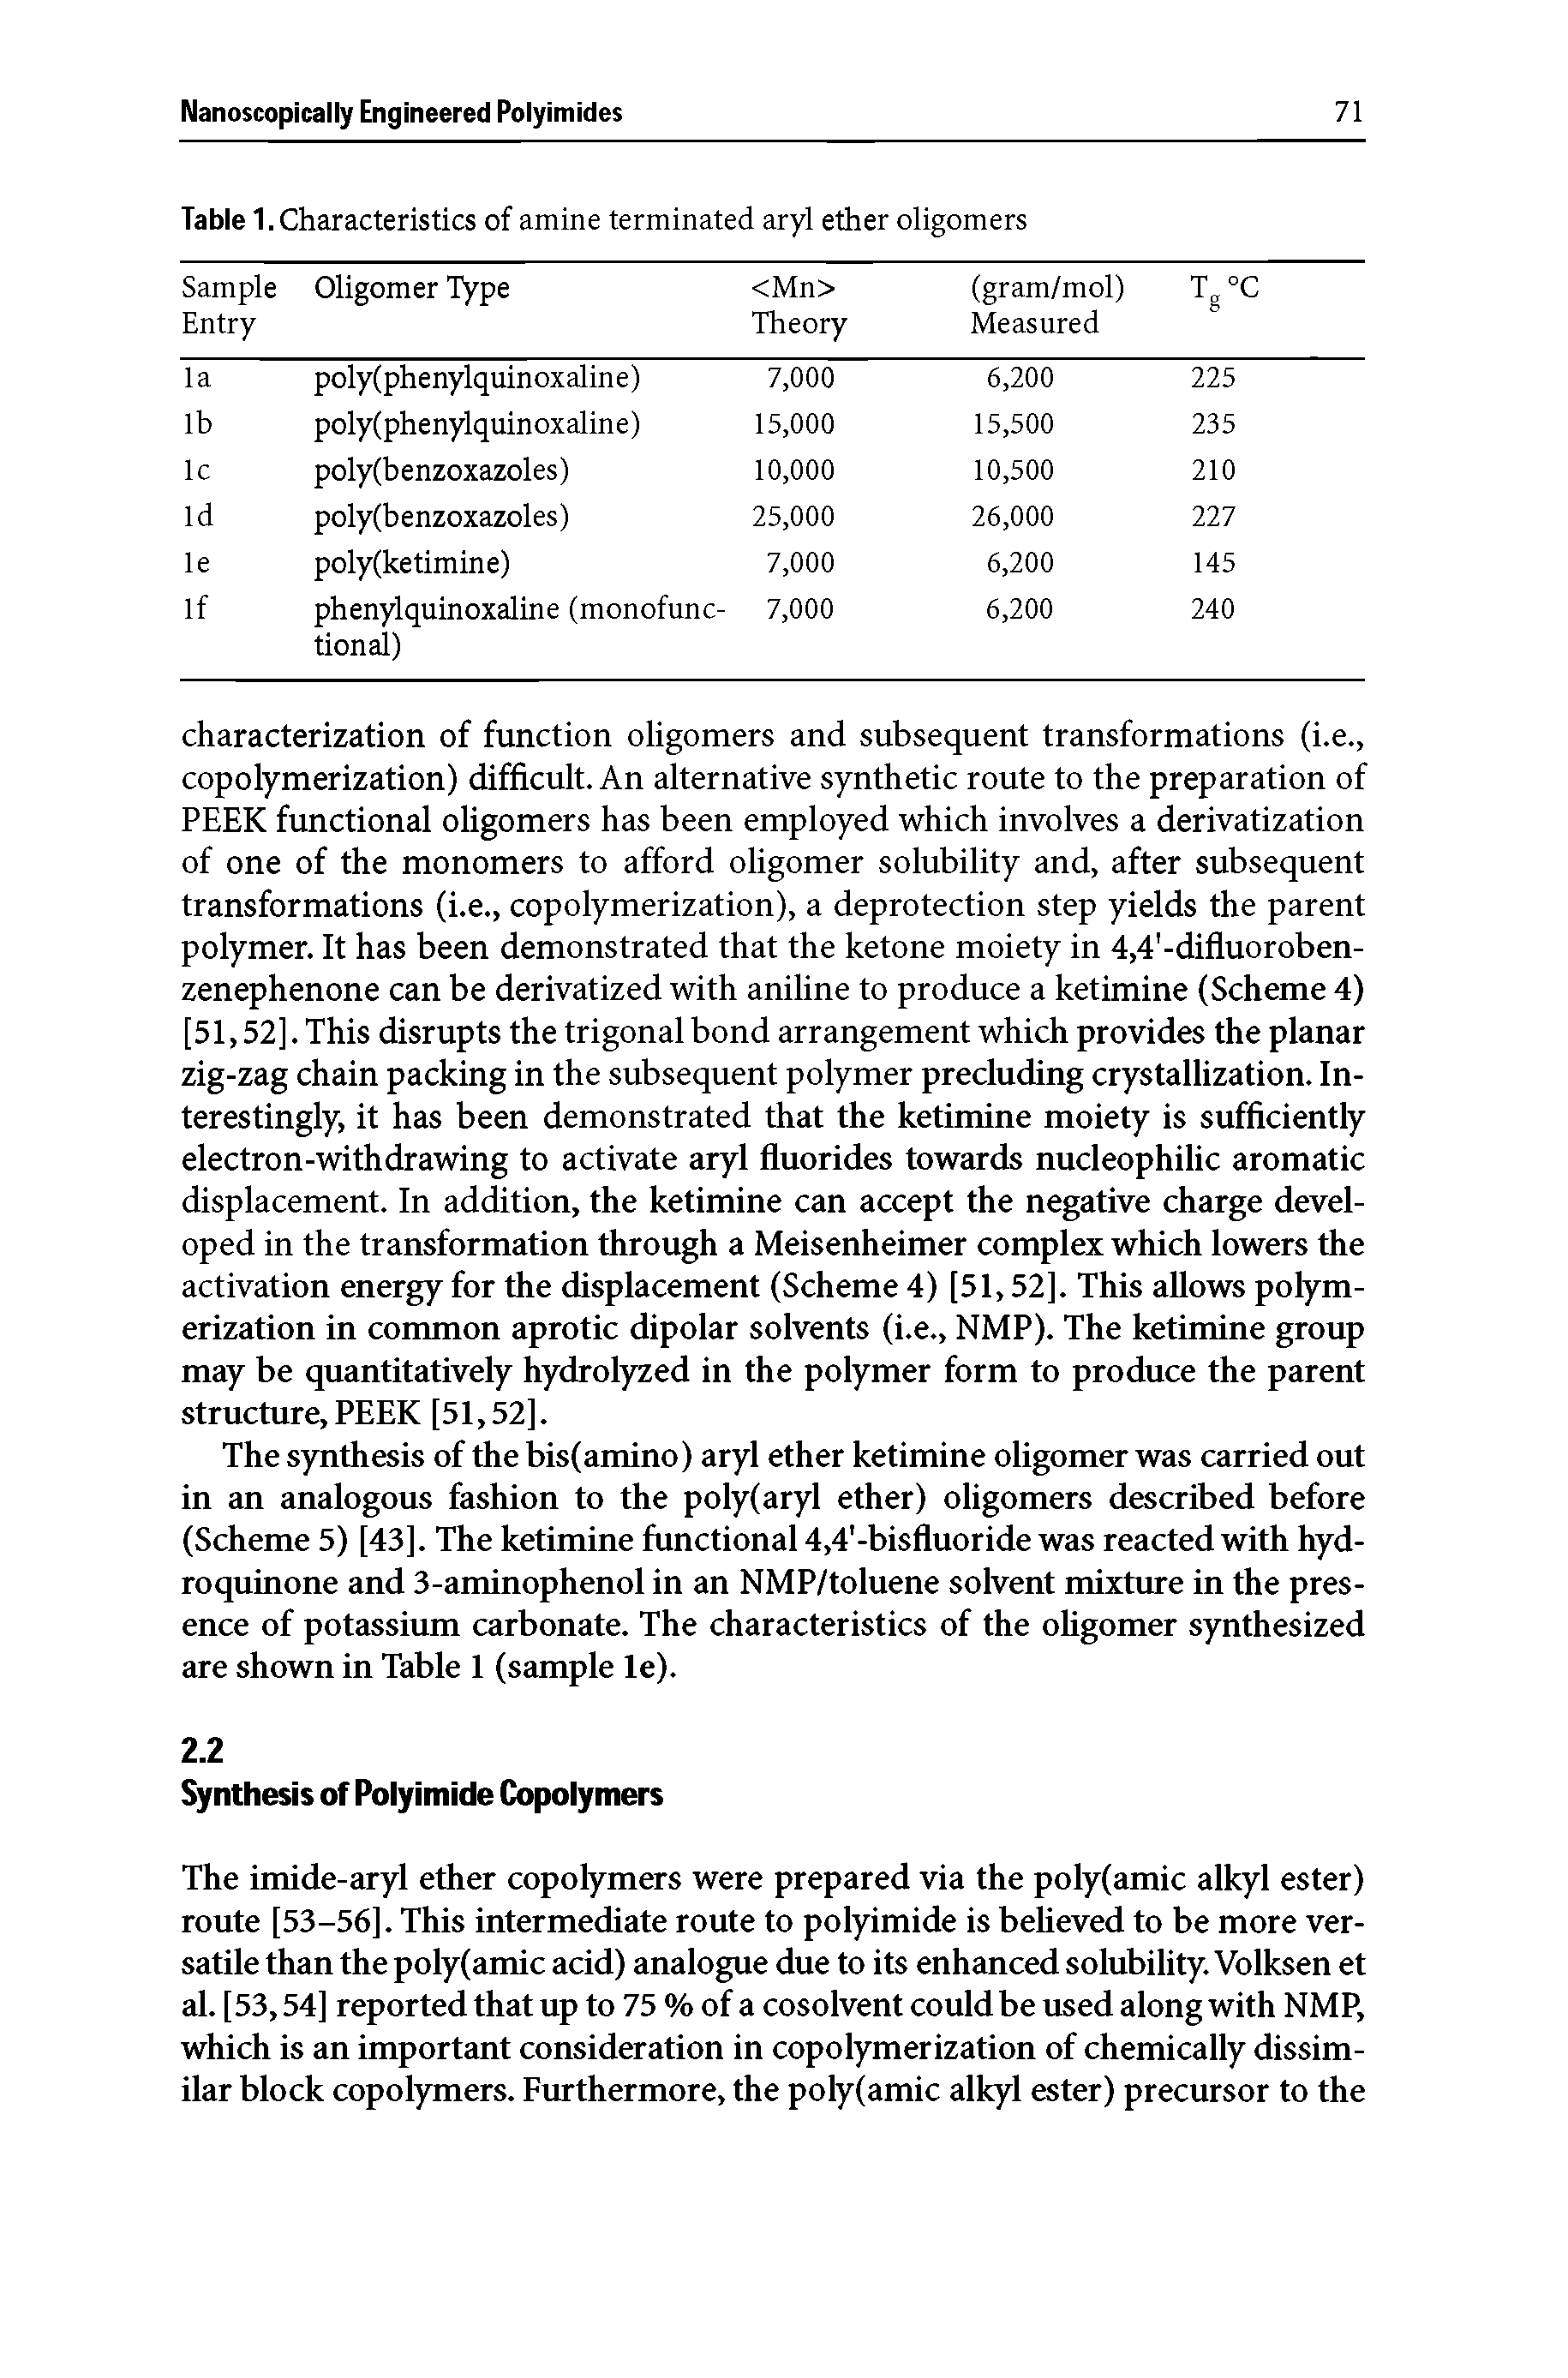 Table 1. Characteristics of amine terminated aryl ether oligomers ...